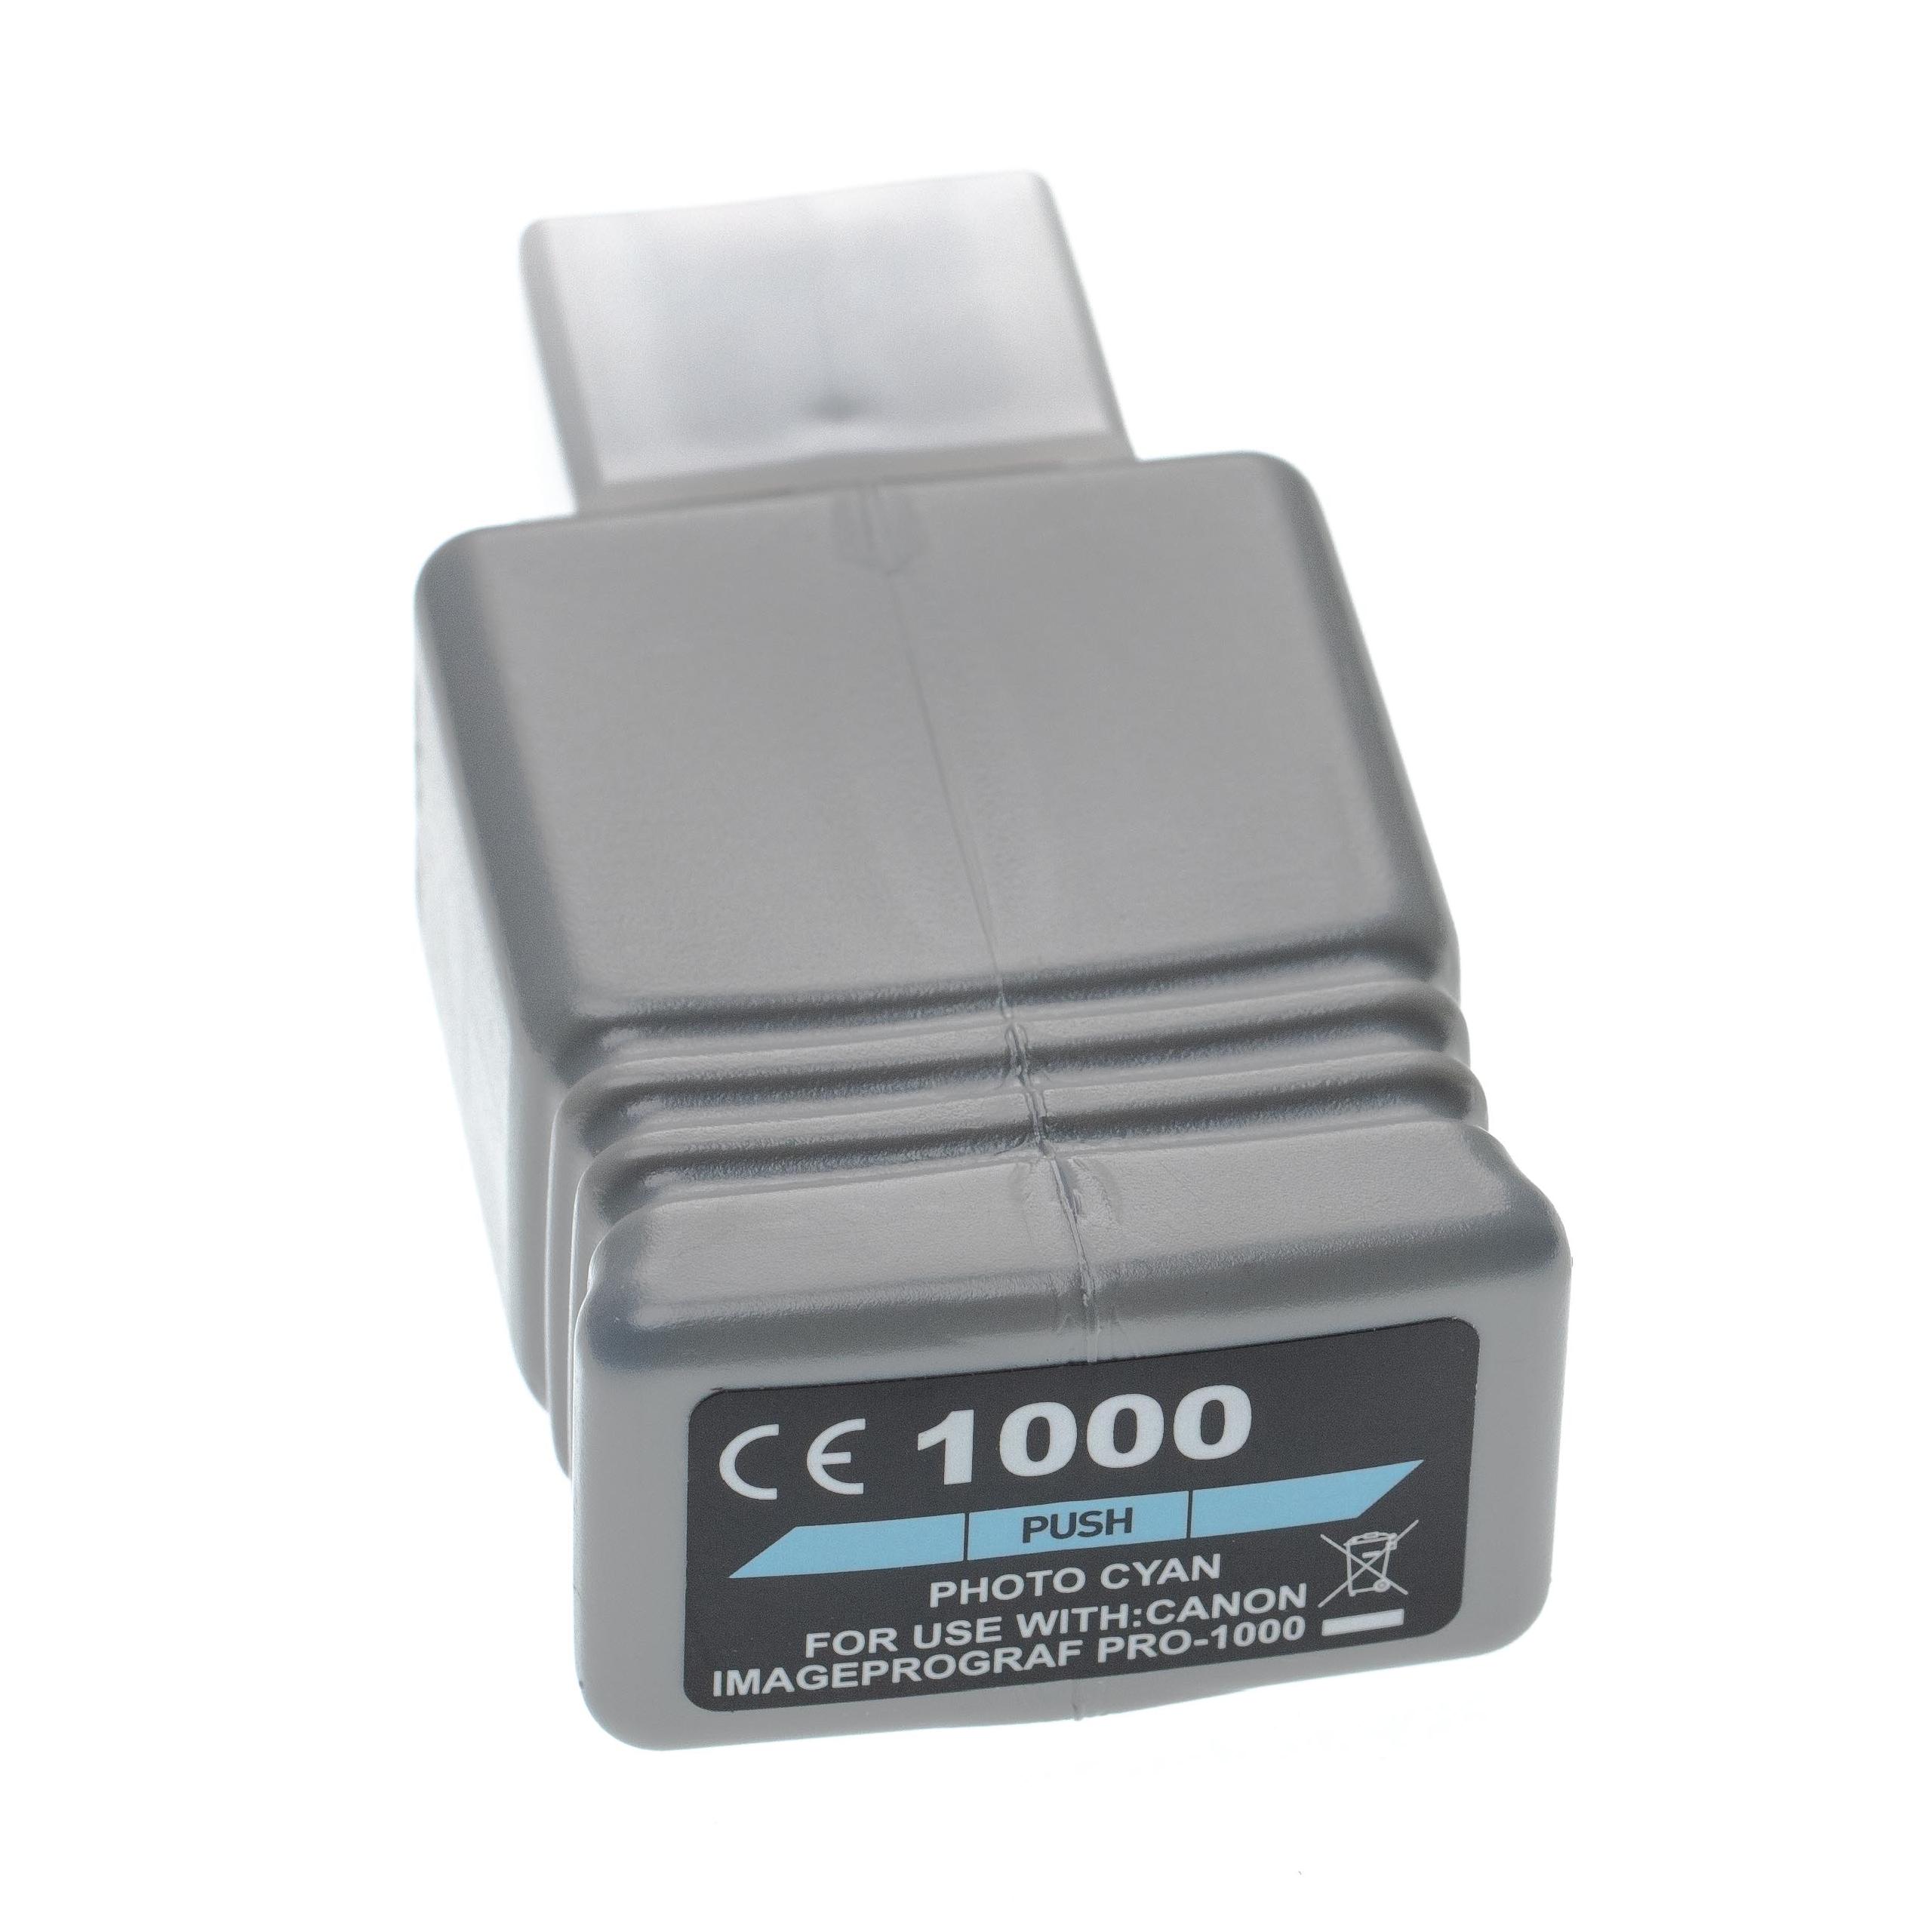 Ink Cartridge as Exchange for Canon PFI-1000PC, PFI-1000 PC for Canon Printer - Photo Cyan 80 ml + Chip